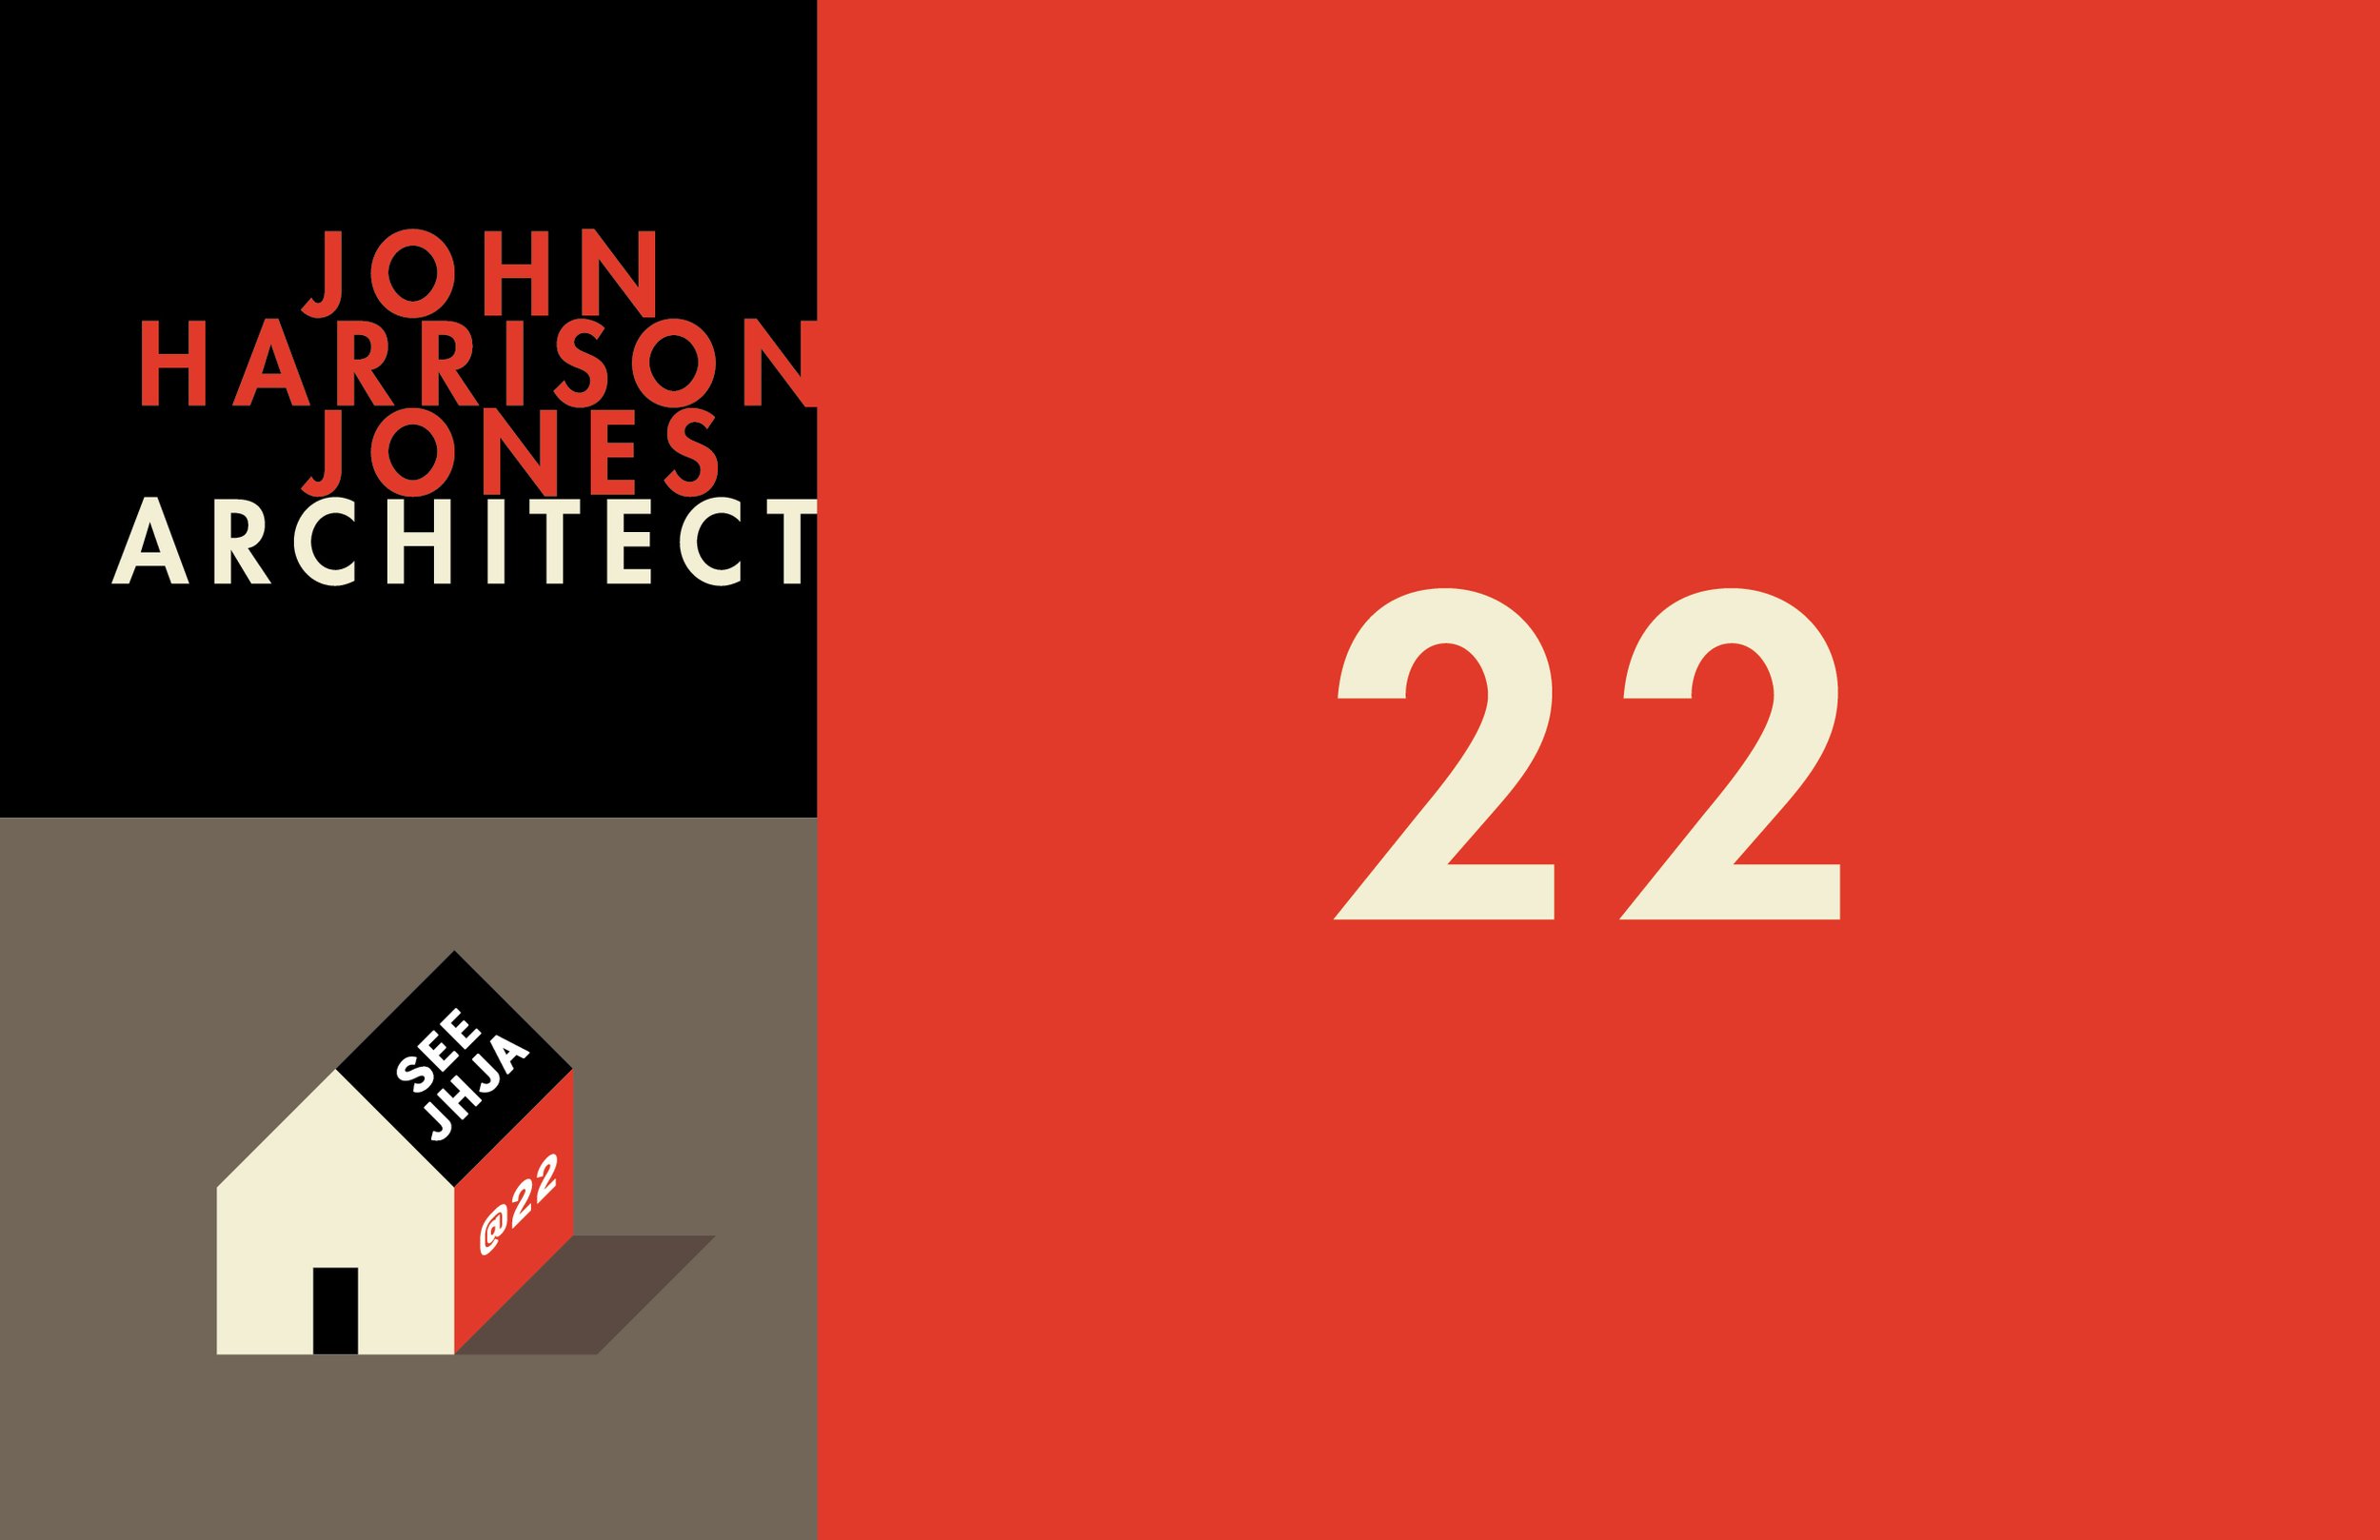  John Harrison Jones Architect  22nd Anniversary postcard  Branding creative and design by Chuck Mitchell 